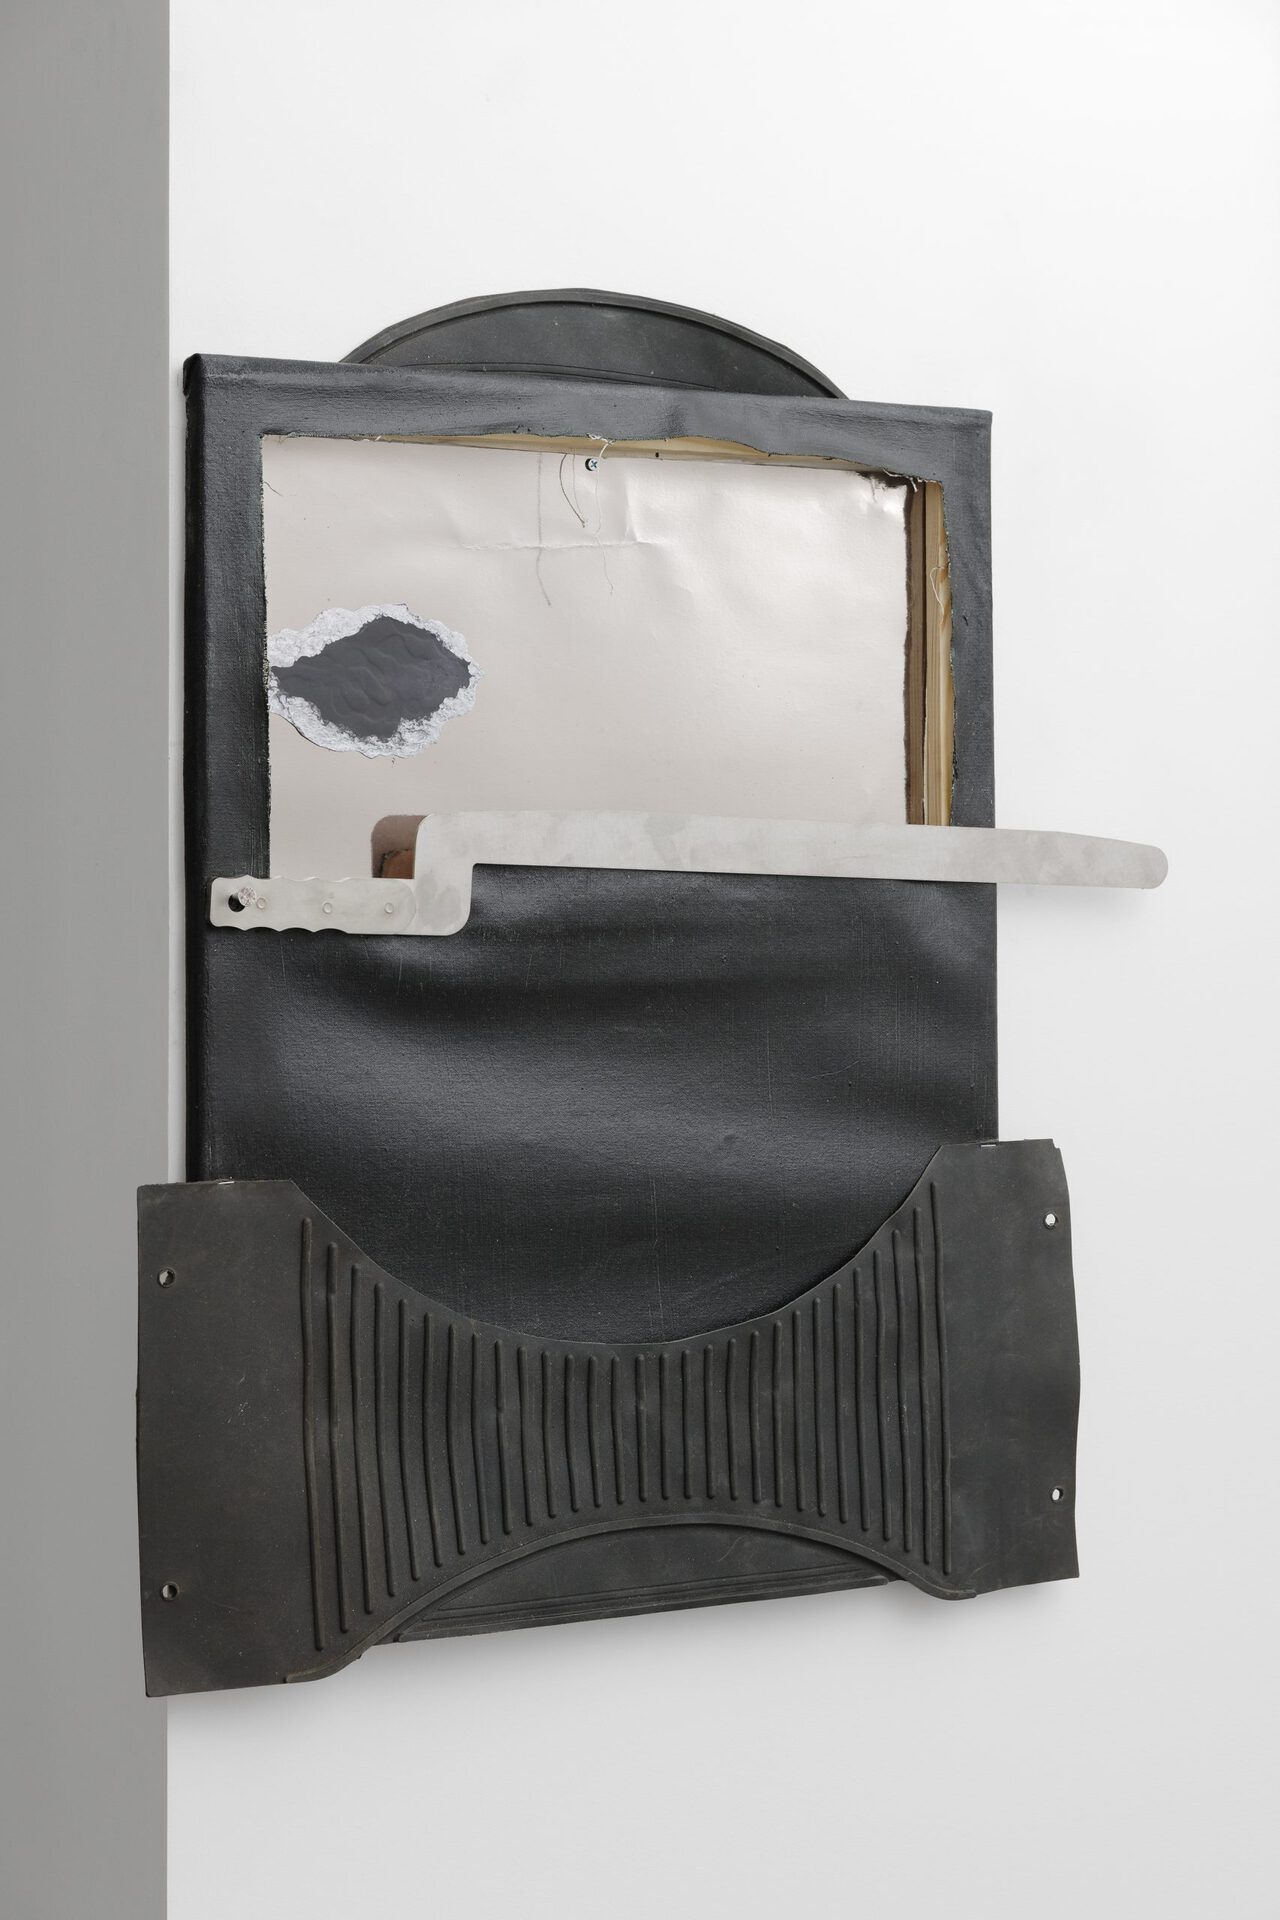 Cudelice Brazelton IV, Rip Technology, 2021, acrylic, steel, rubber, inkjet print, synthetic leather on canvas, 74 x 65 cm